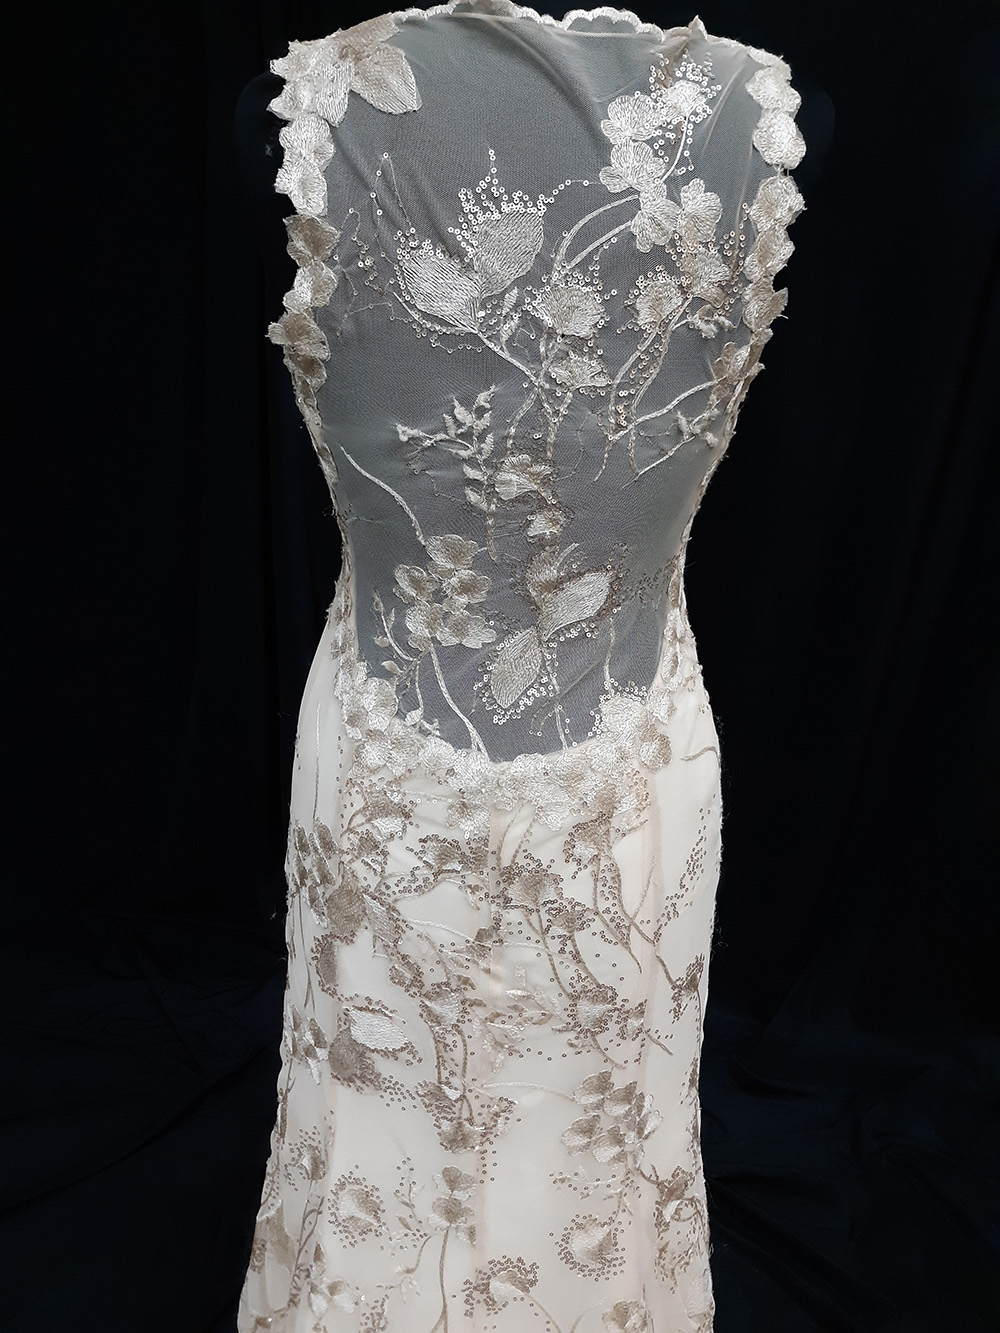 Paula Varsalona NYC Original One-of-a-Kind Wedding Dress - Size 8 ...